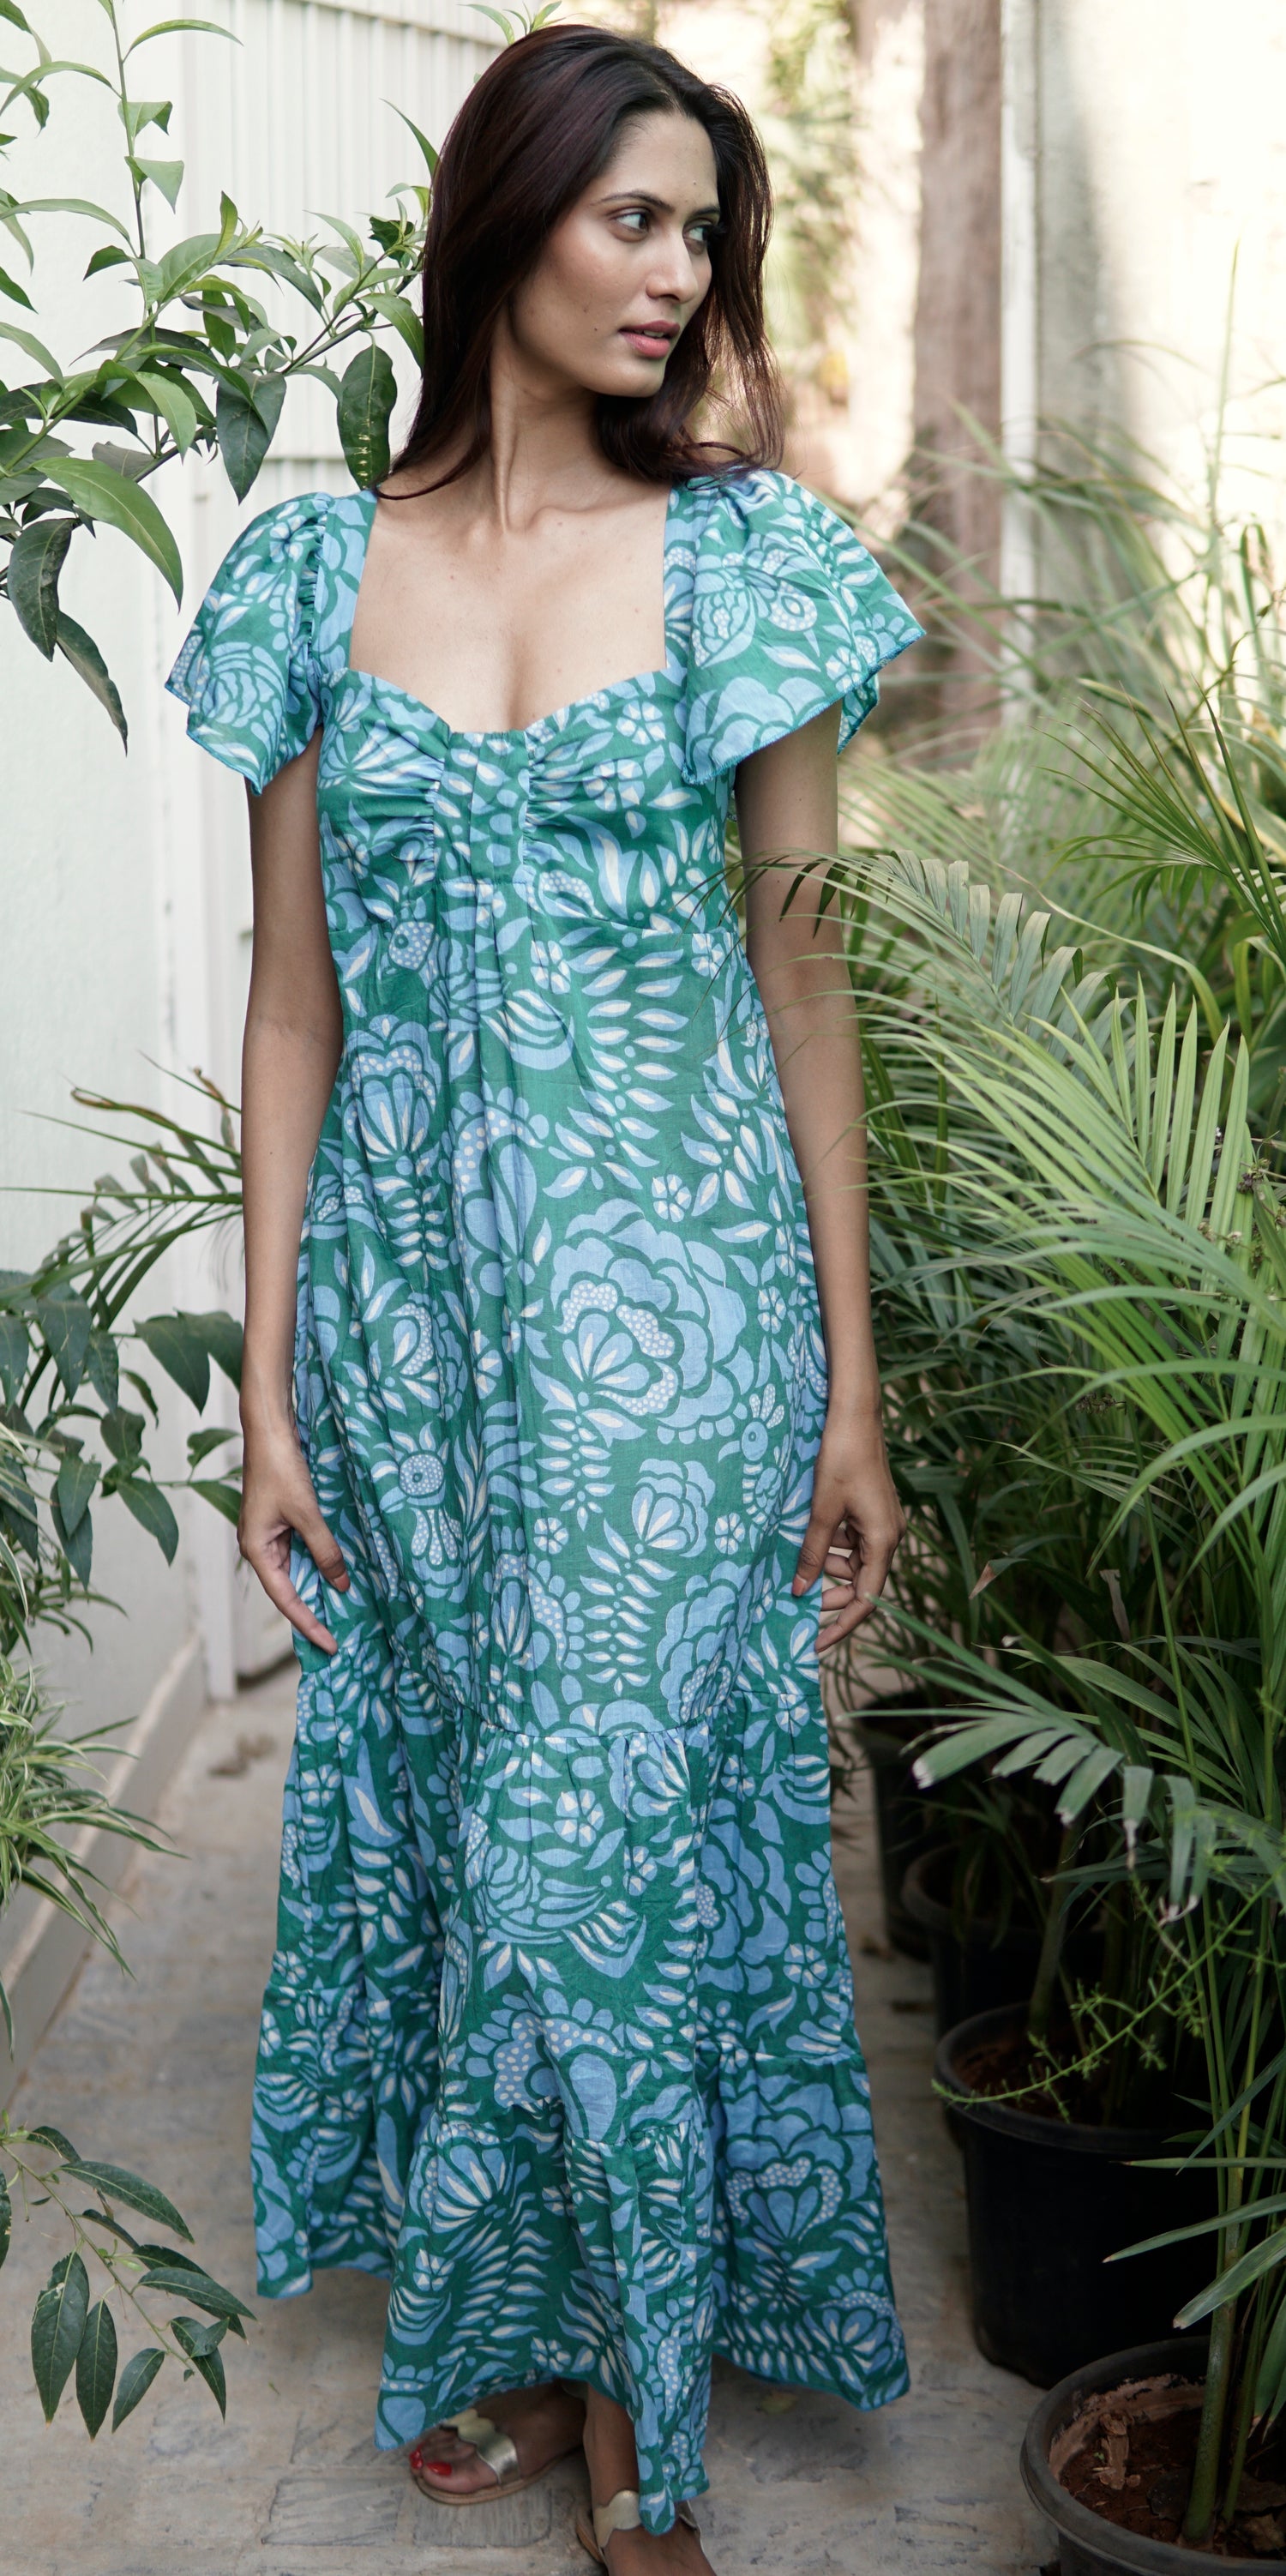 Gaelle Summer maxi dress. Green, blue and white cotton, printed maxi dress